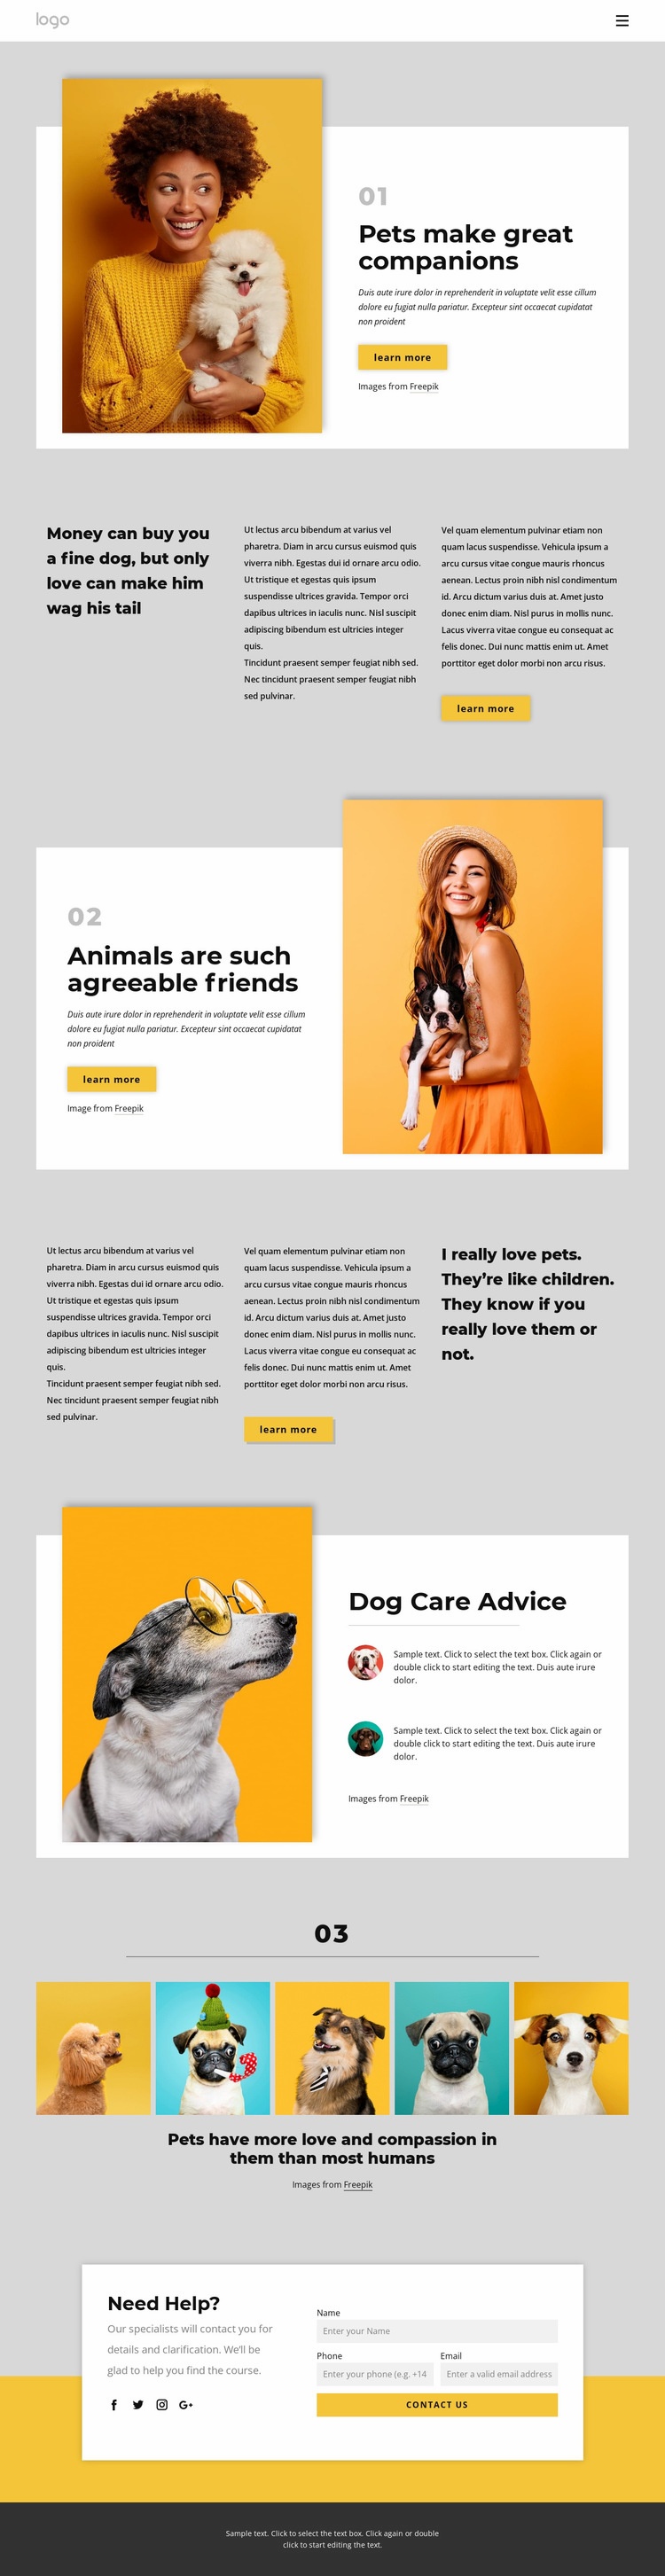 Why pets make us happier Web Page Design